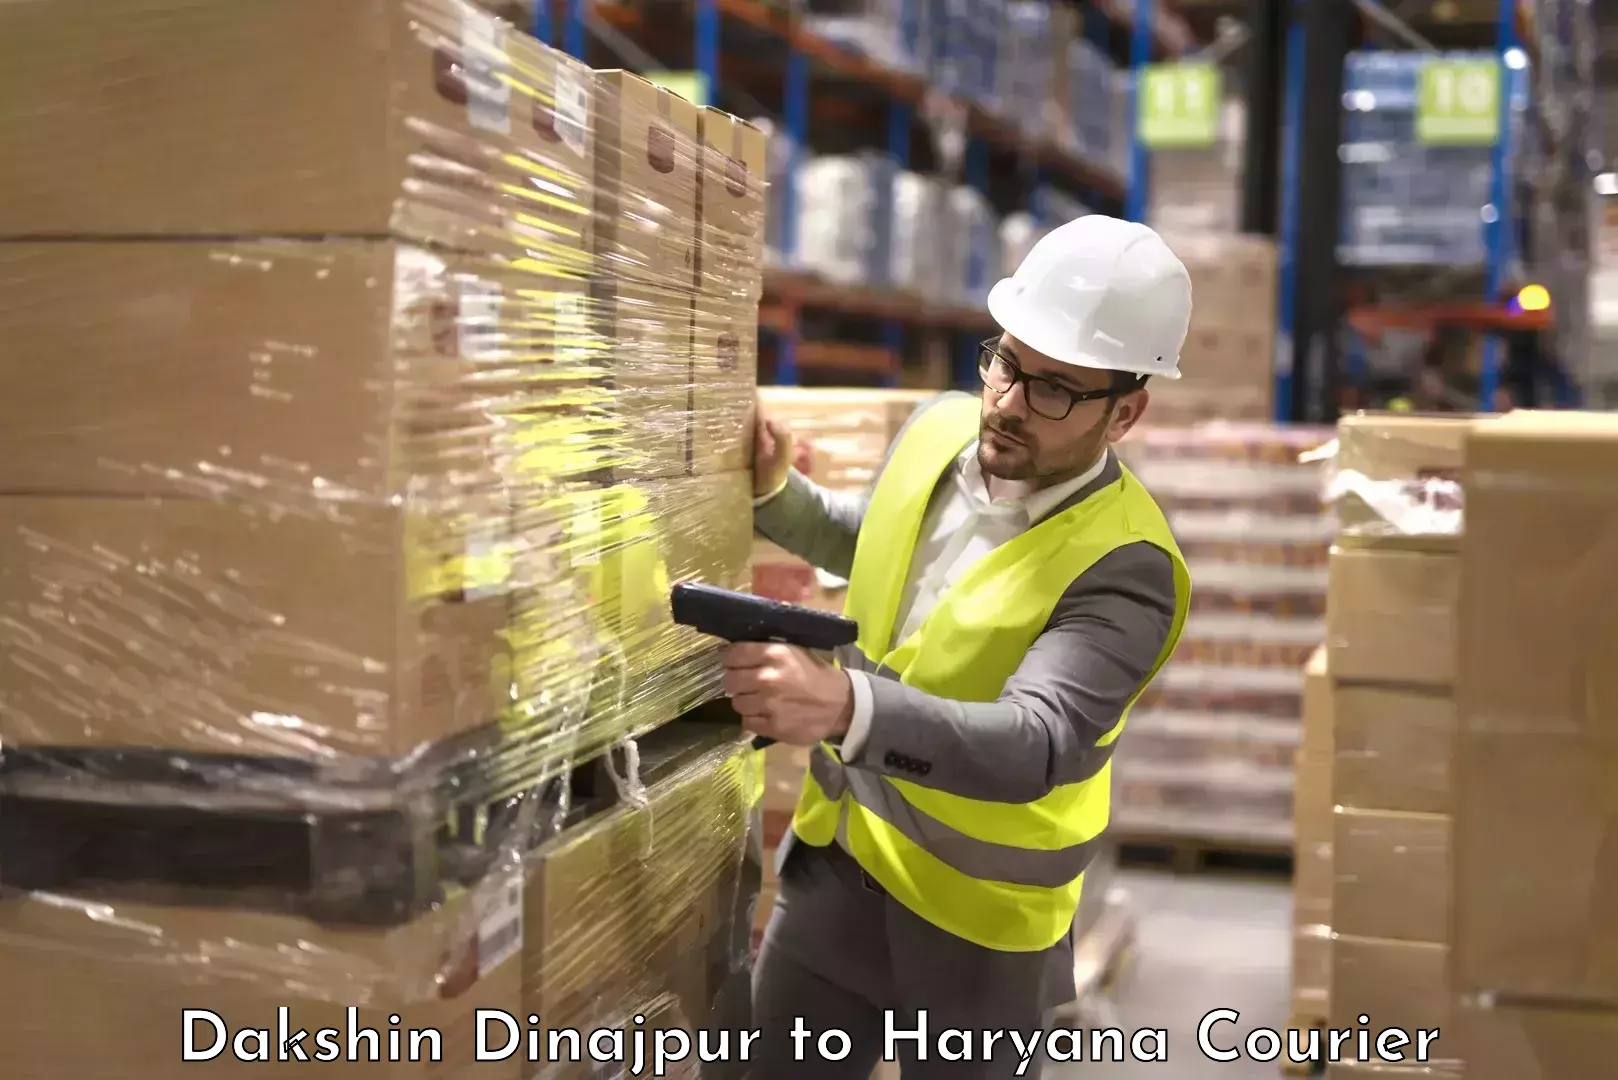 Luggage shipment specialists Dakshin Dinajpur to Dharuhera